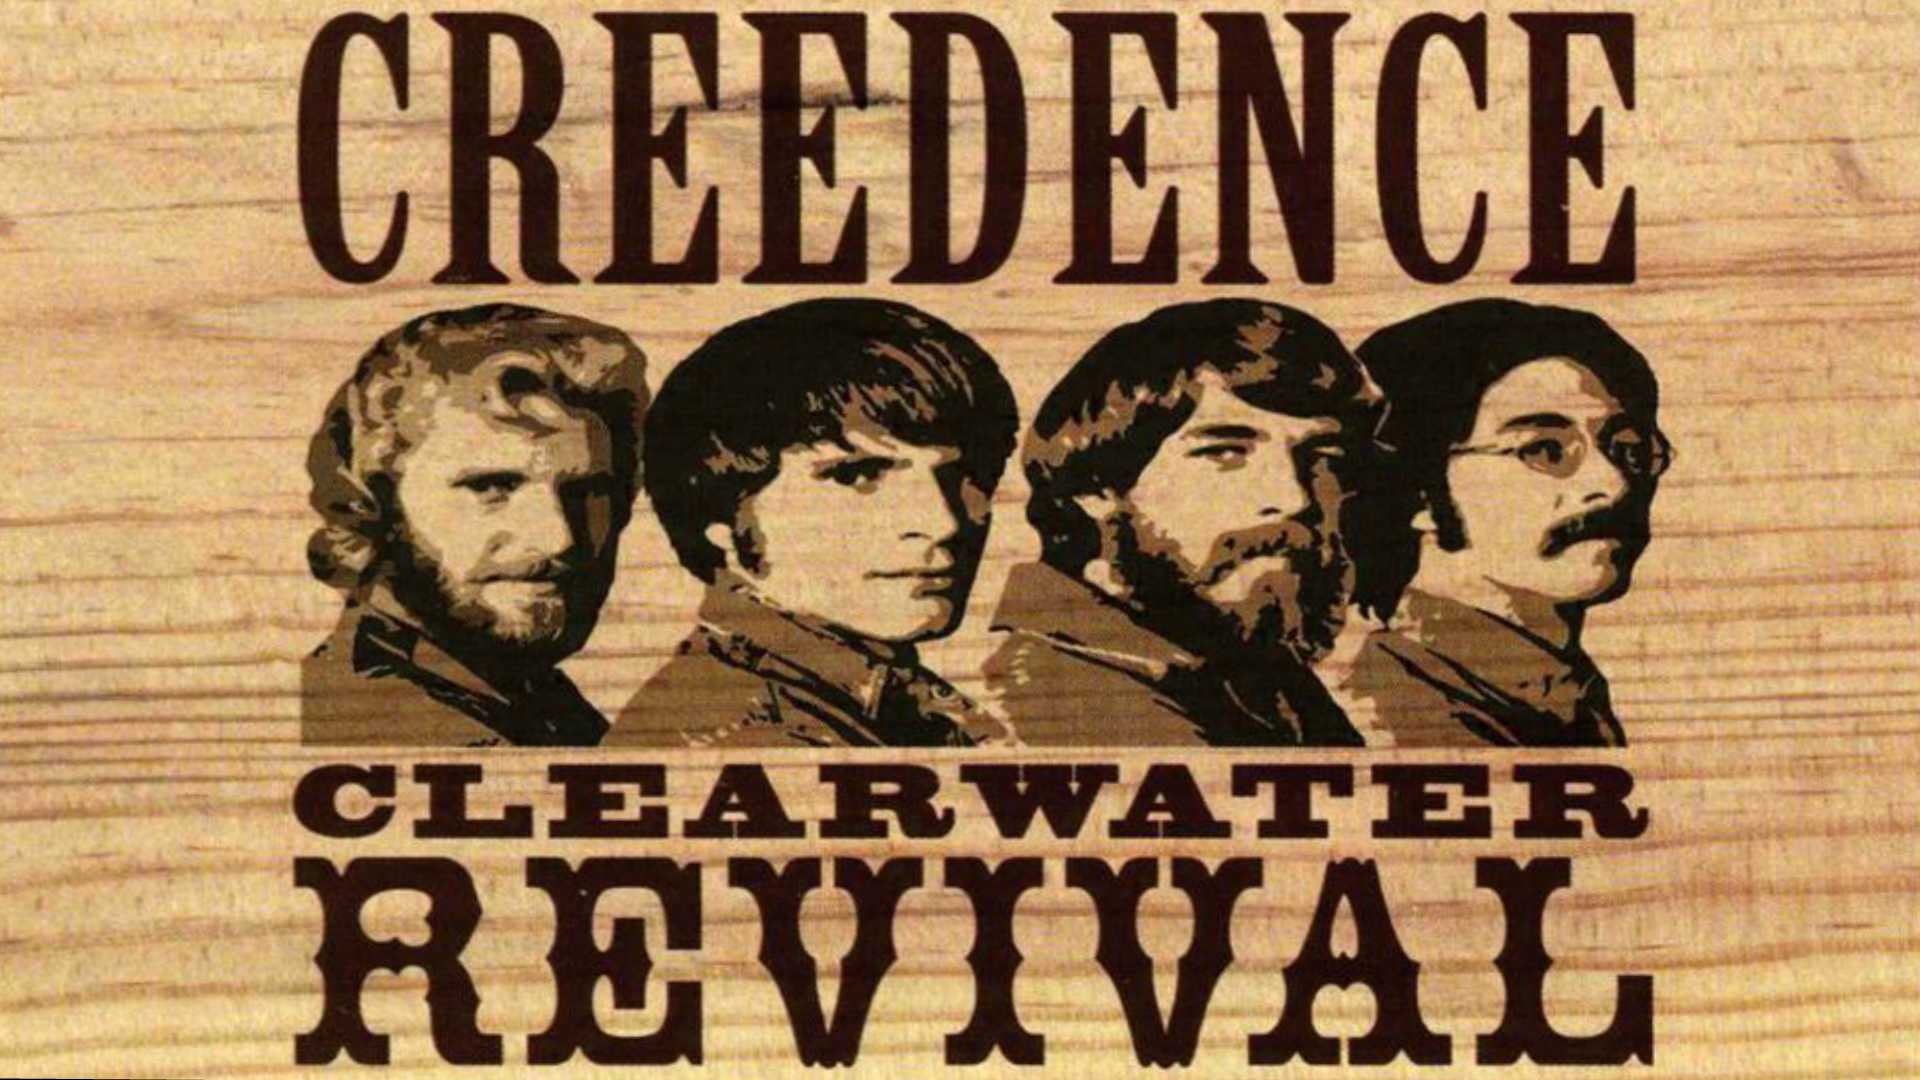 Завантажити шпалери Creedence Clearwater Revival на телефон безкоштовно